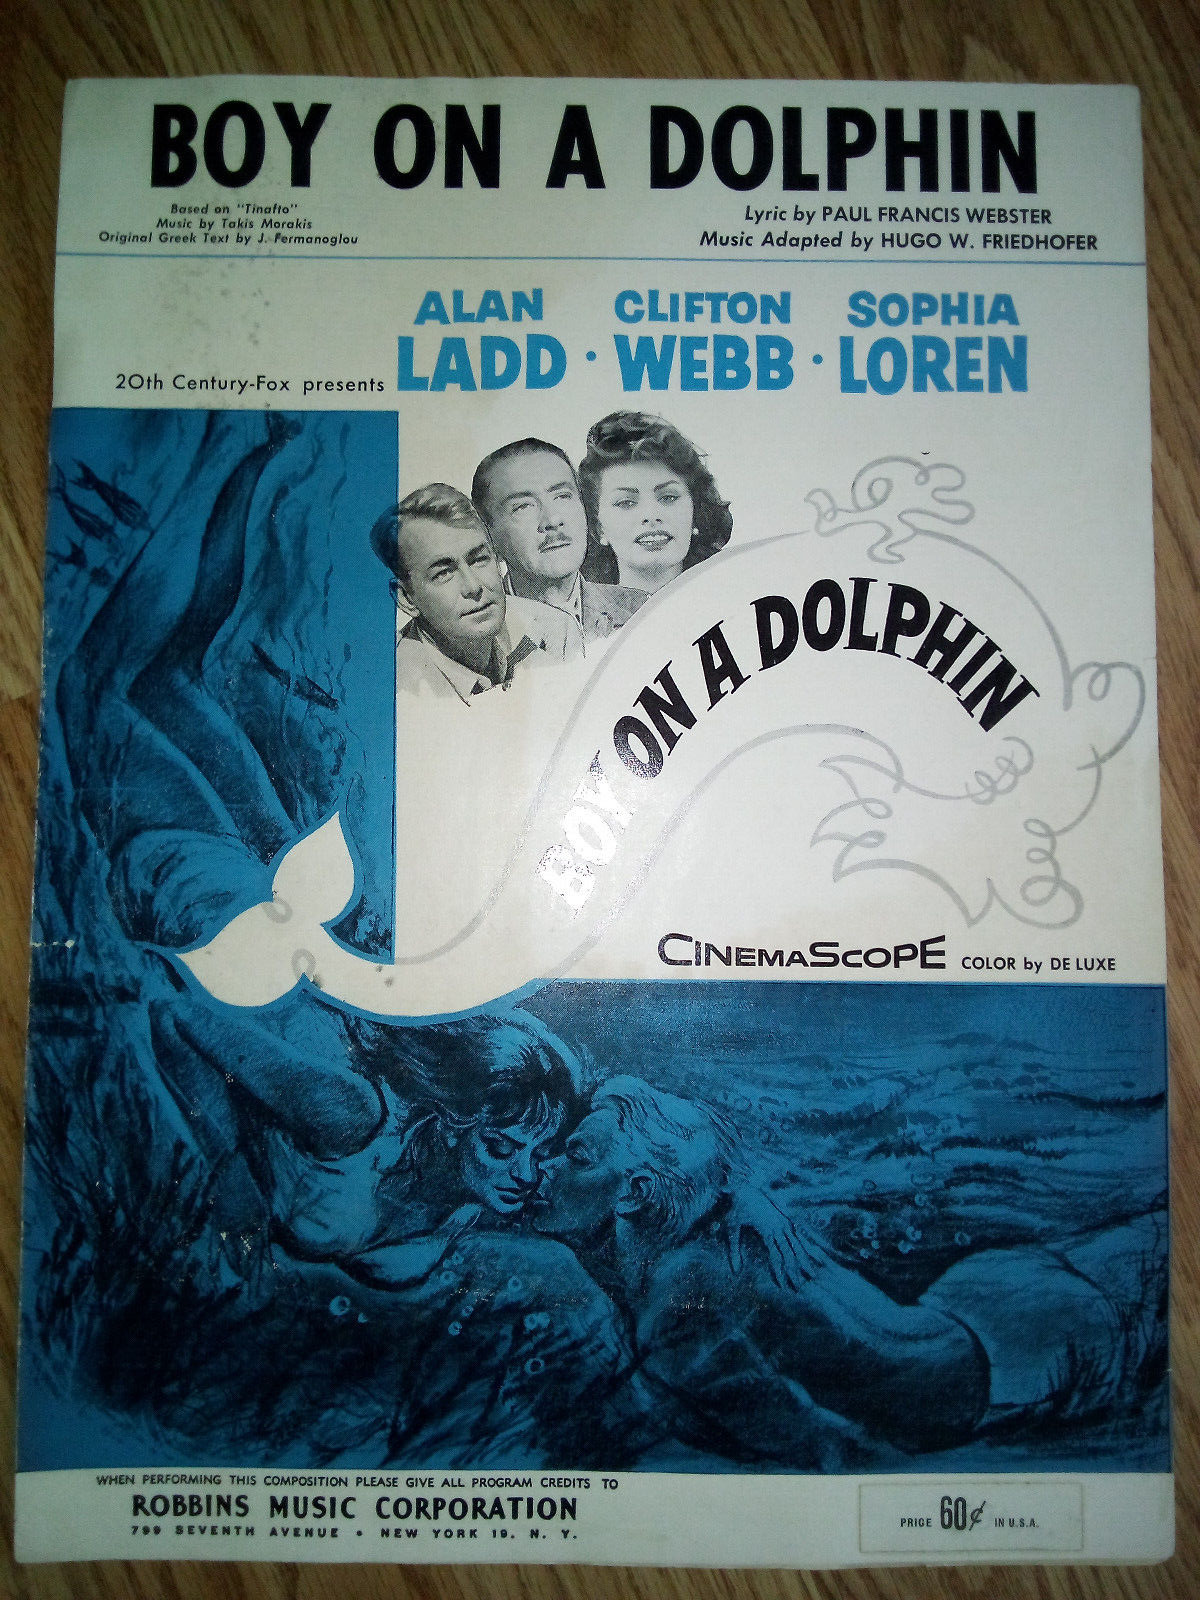 Boy On A Dolphin-original sheet music-1950s-Sofia Loren /Sophia Loren